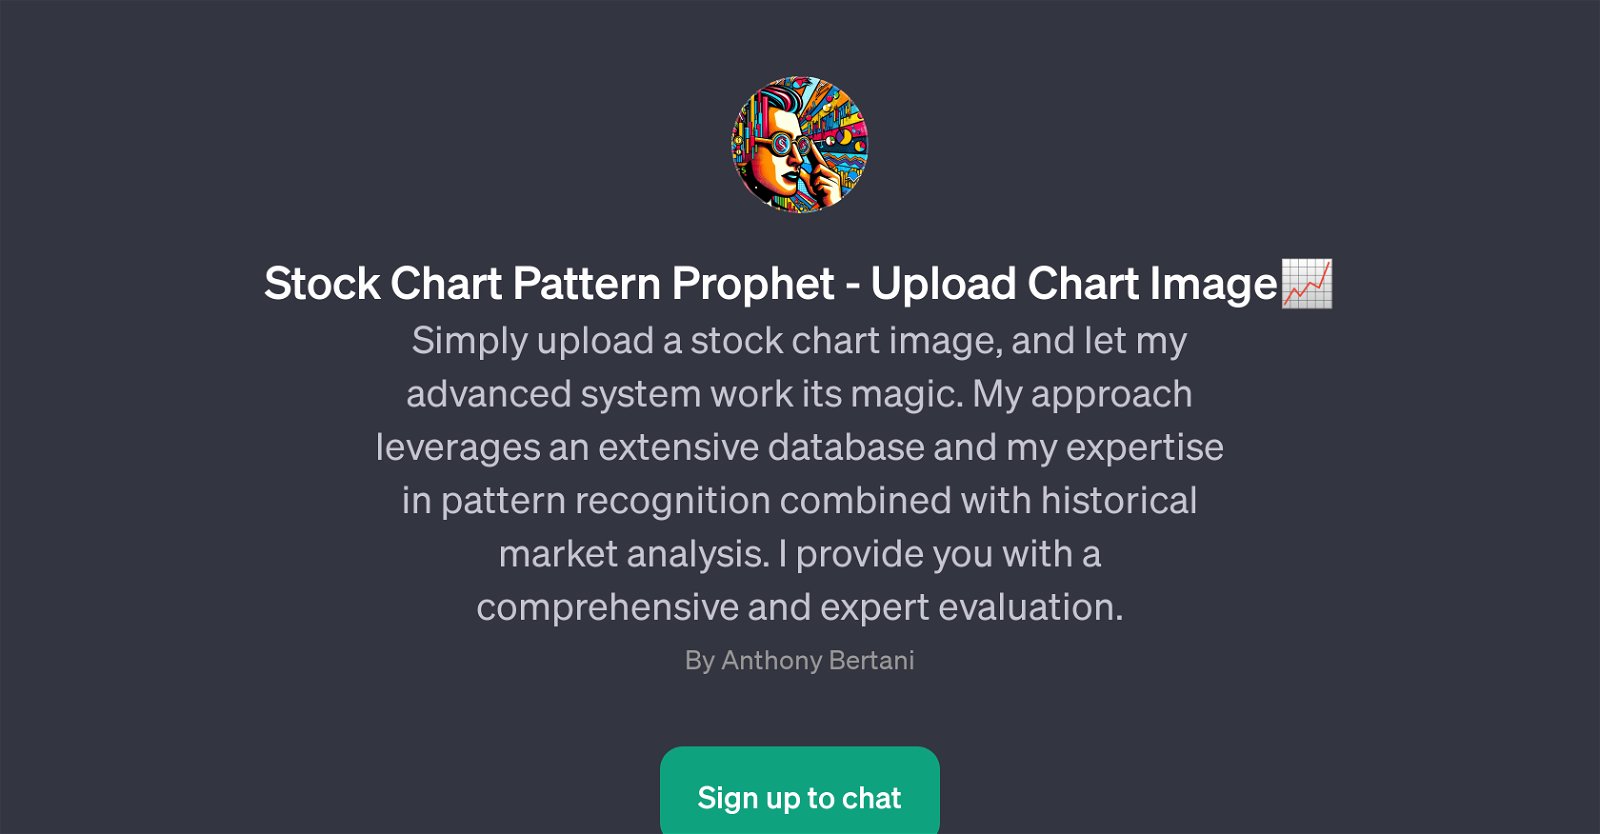 Stock Chart Pattern Prophet website